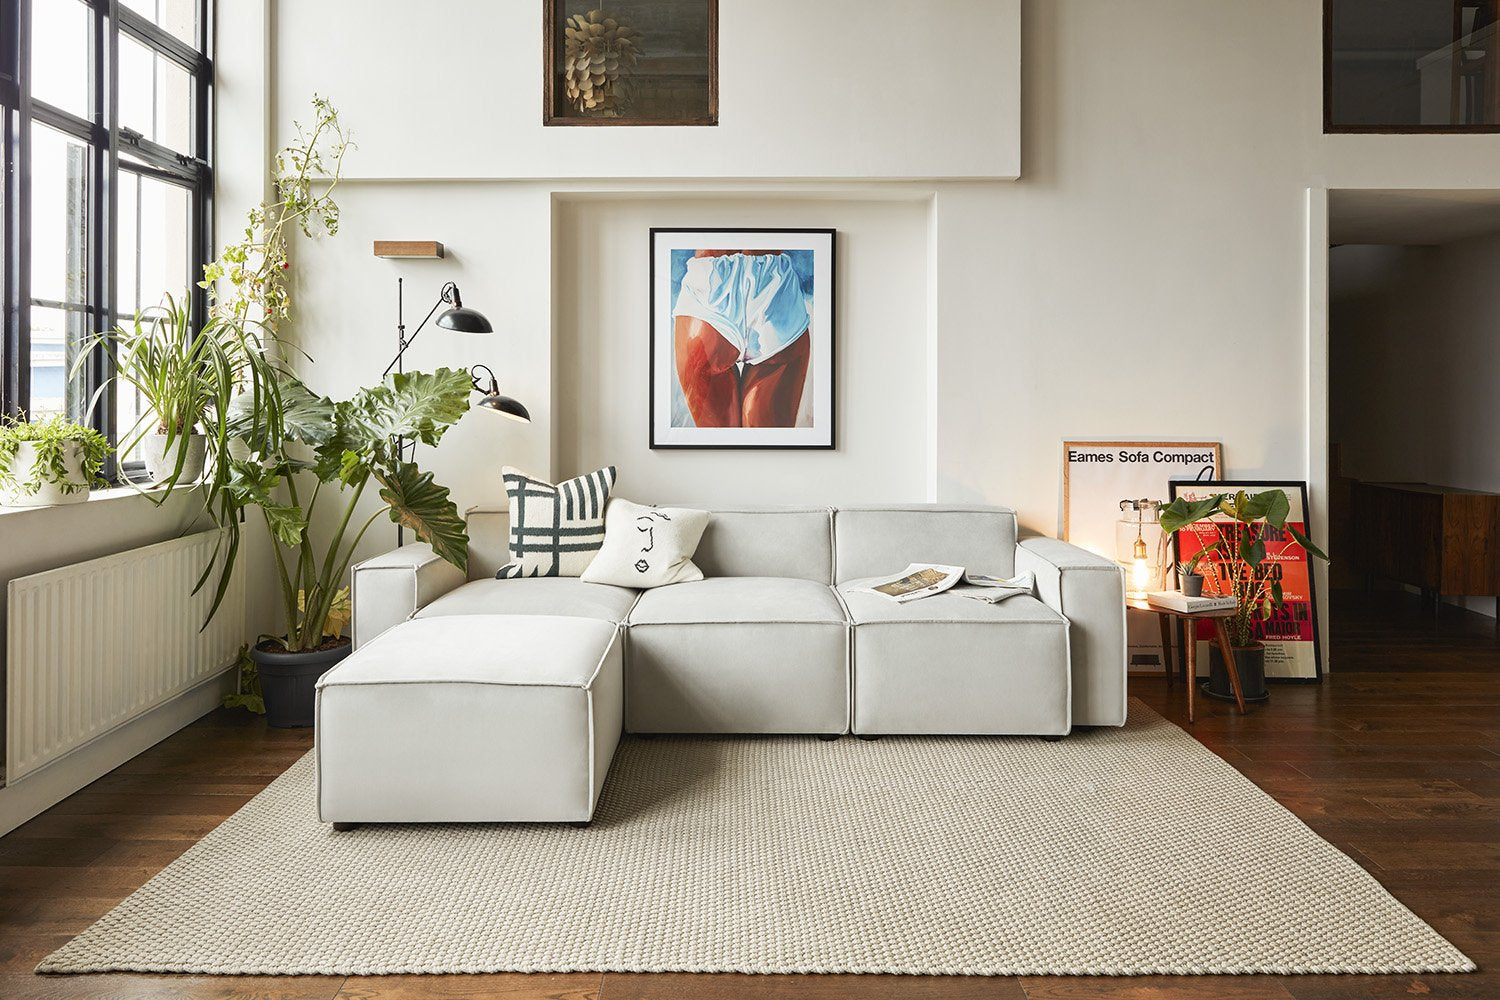 Chaise fabric modular sofa - Swyft Model 03